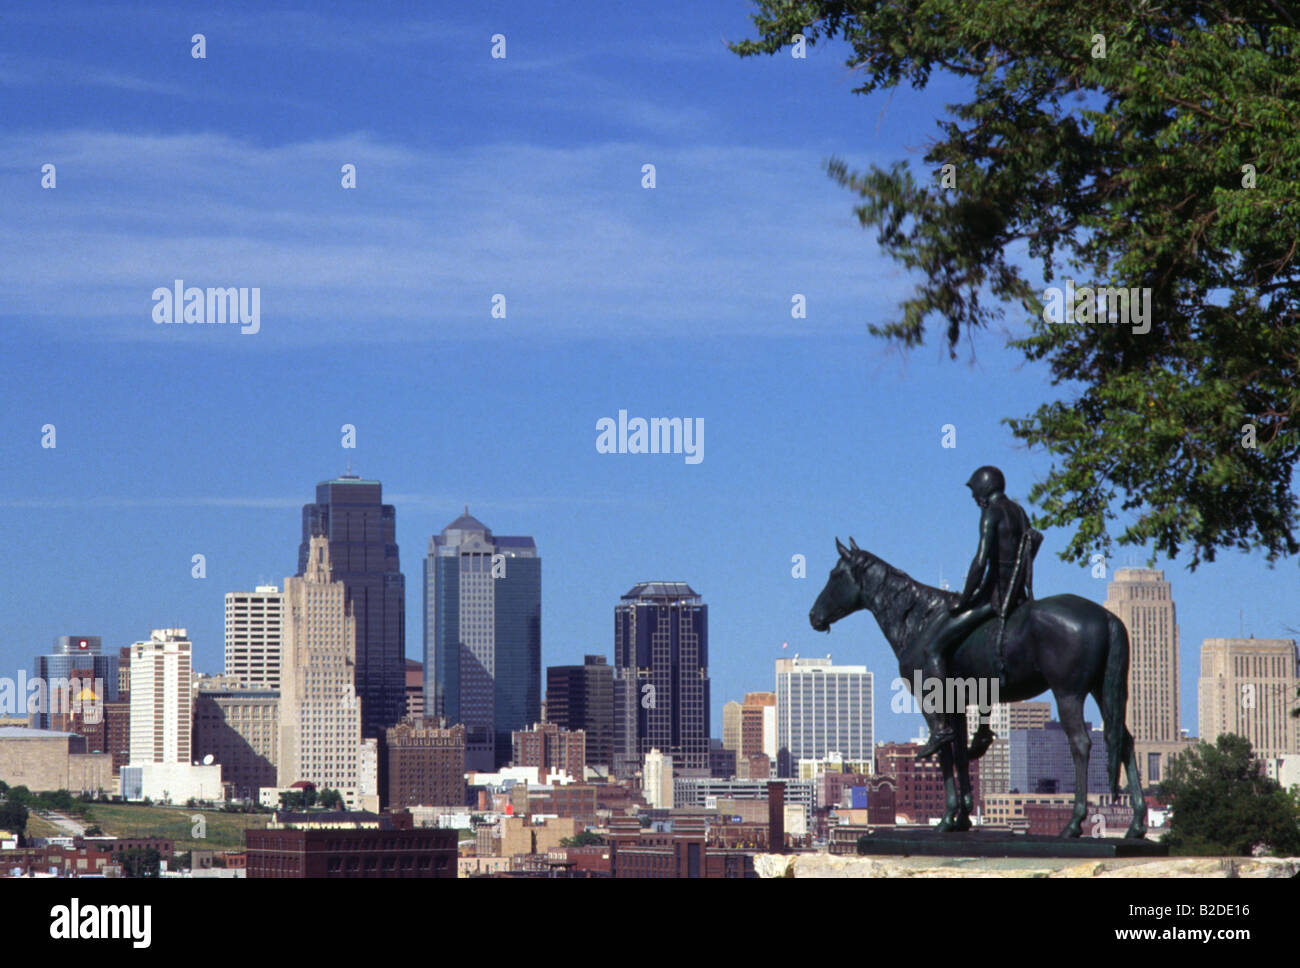 Kansas City Skyline with lone figure on horseback sculpture Stock Photo